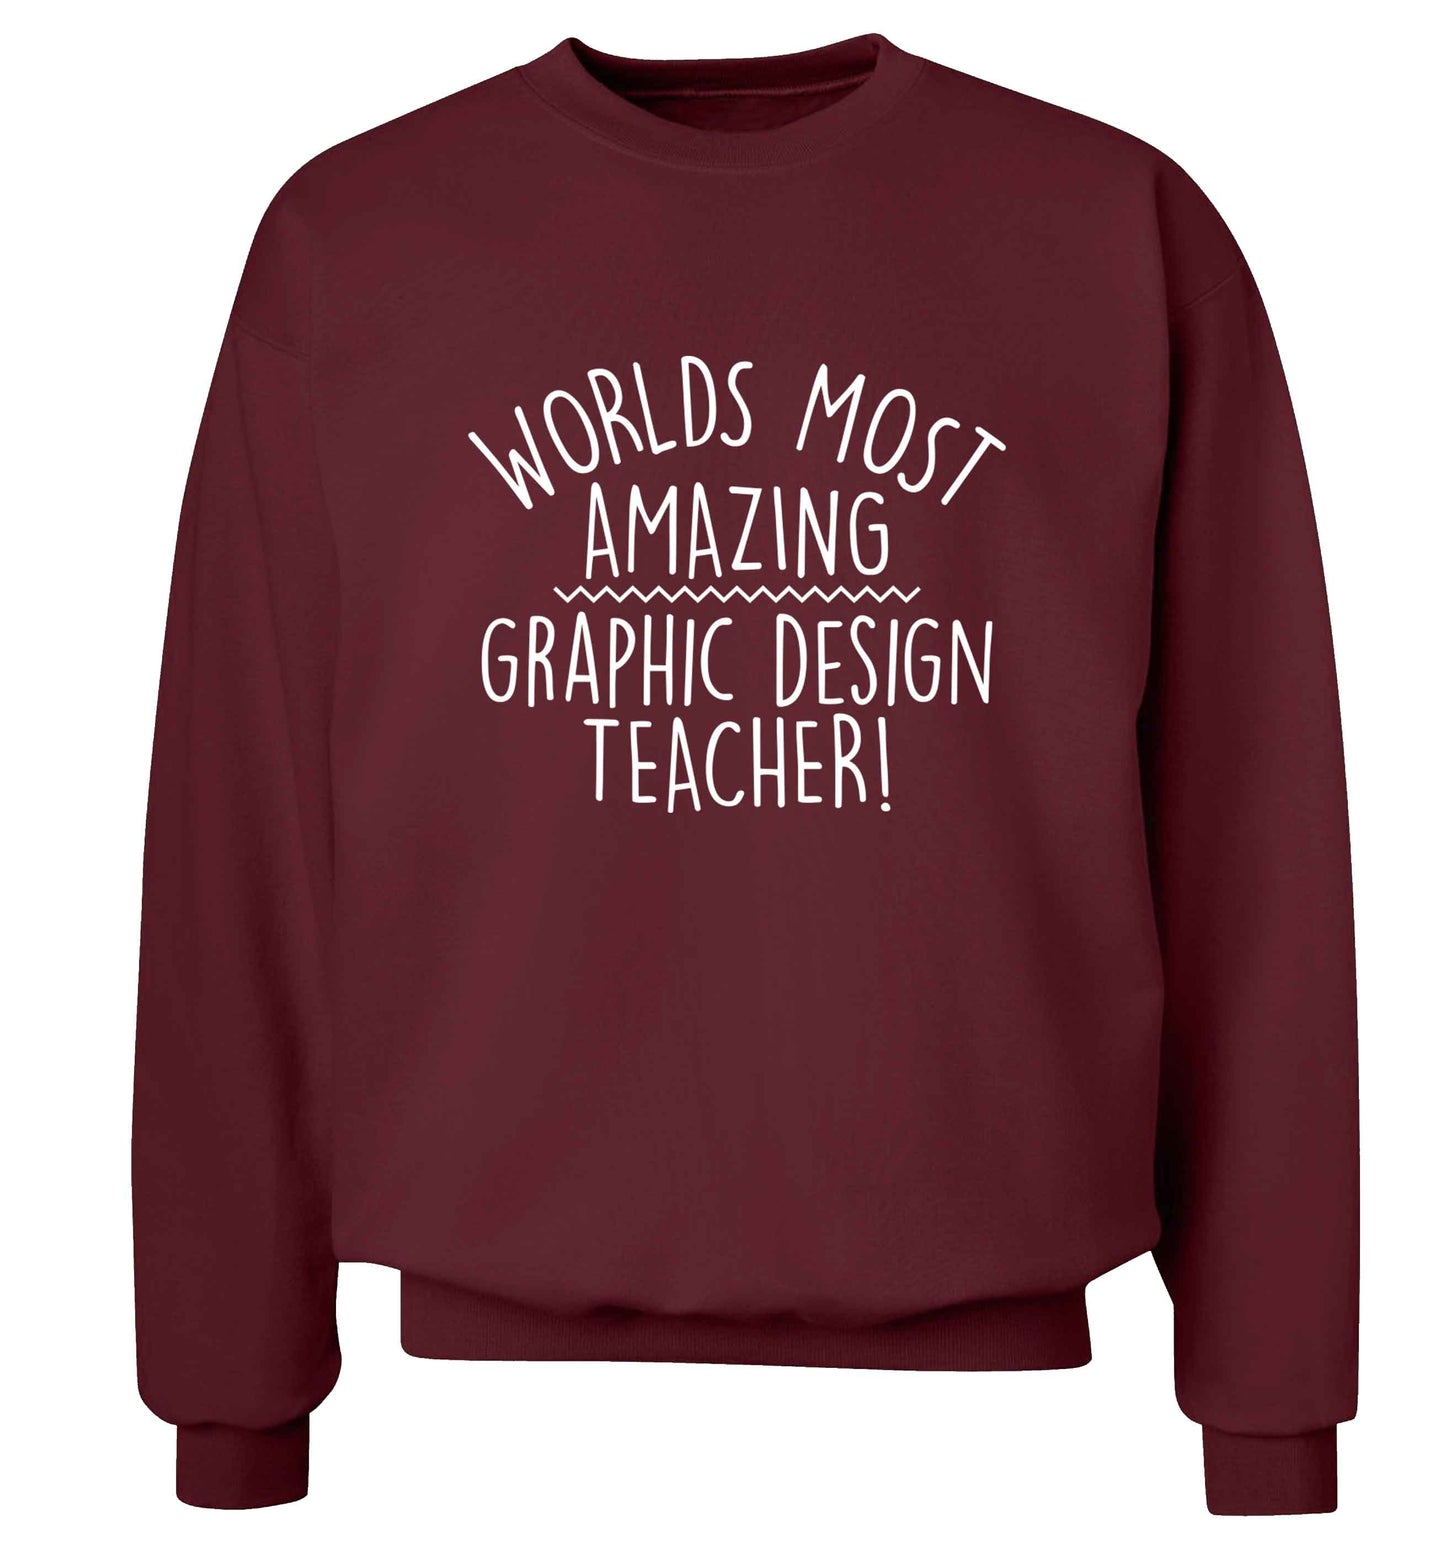 Worlds most amazing graphic design teacher adult's unisex maroon sweater 2XL